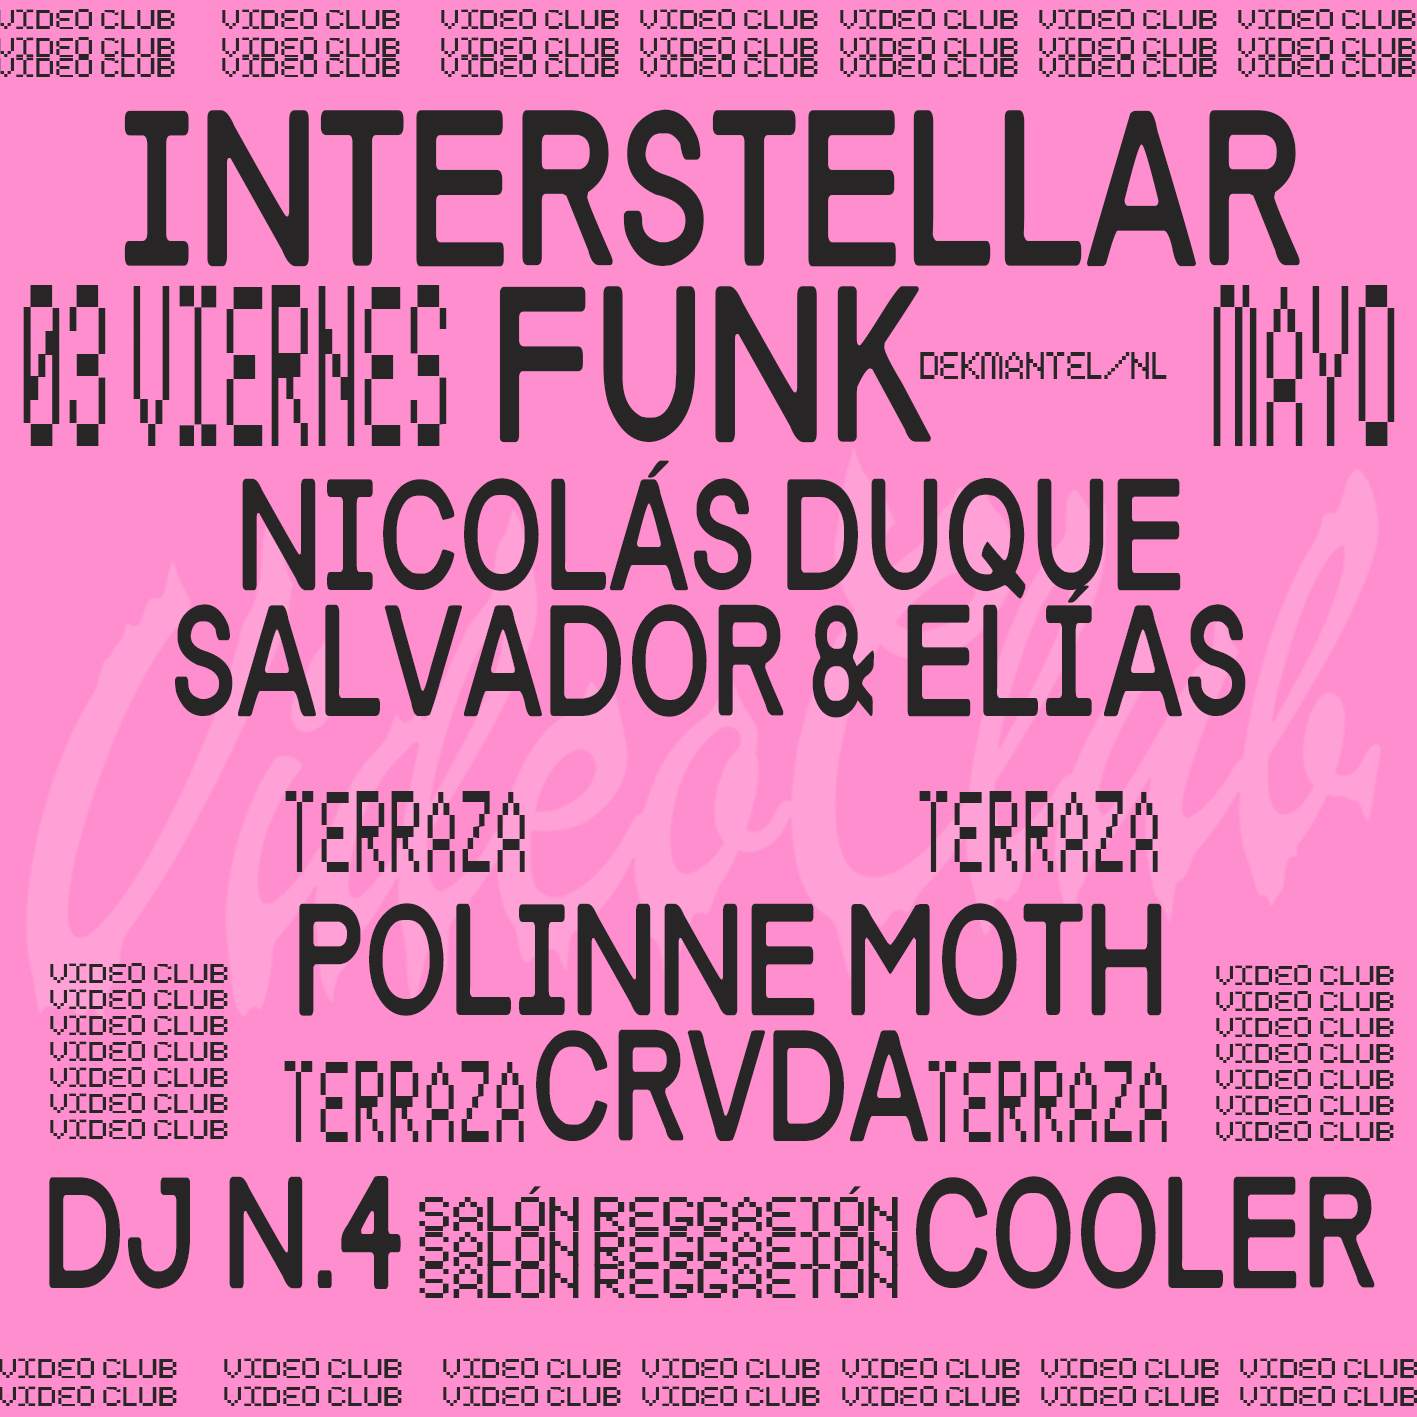 Video Club presenta: Interstellar Funk (Dekmantel / NL) - フライヤー表